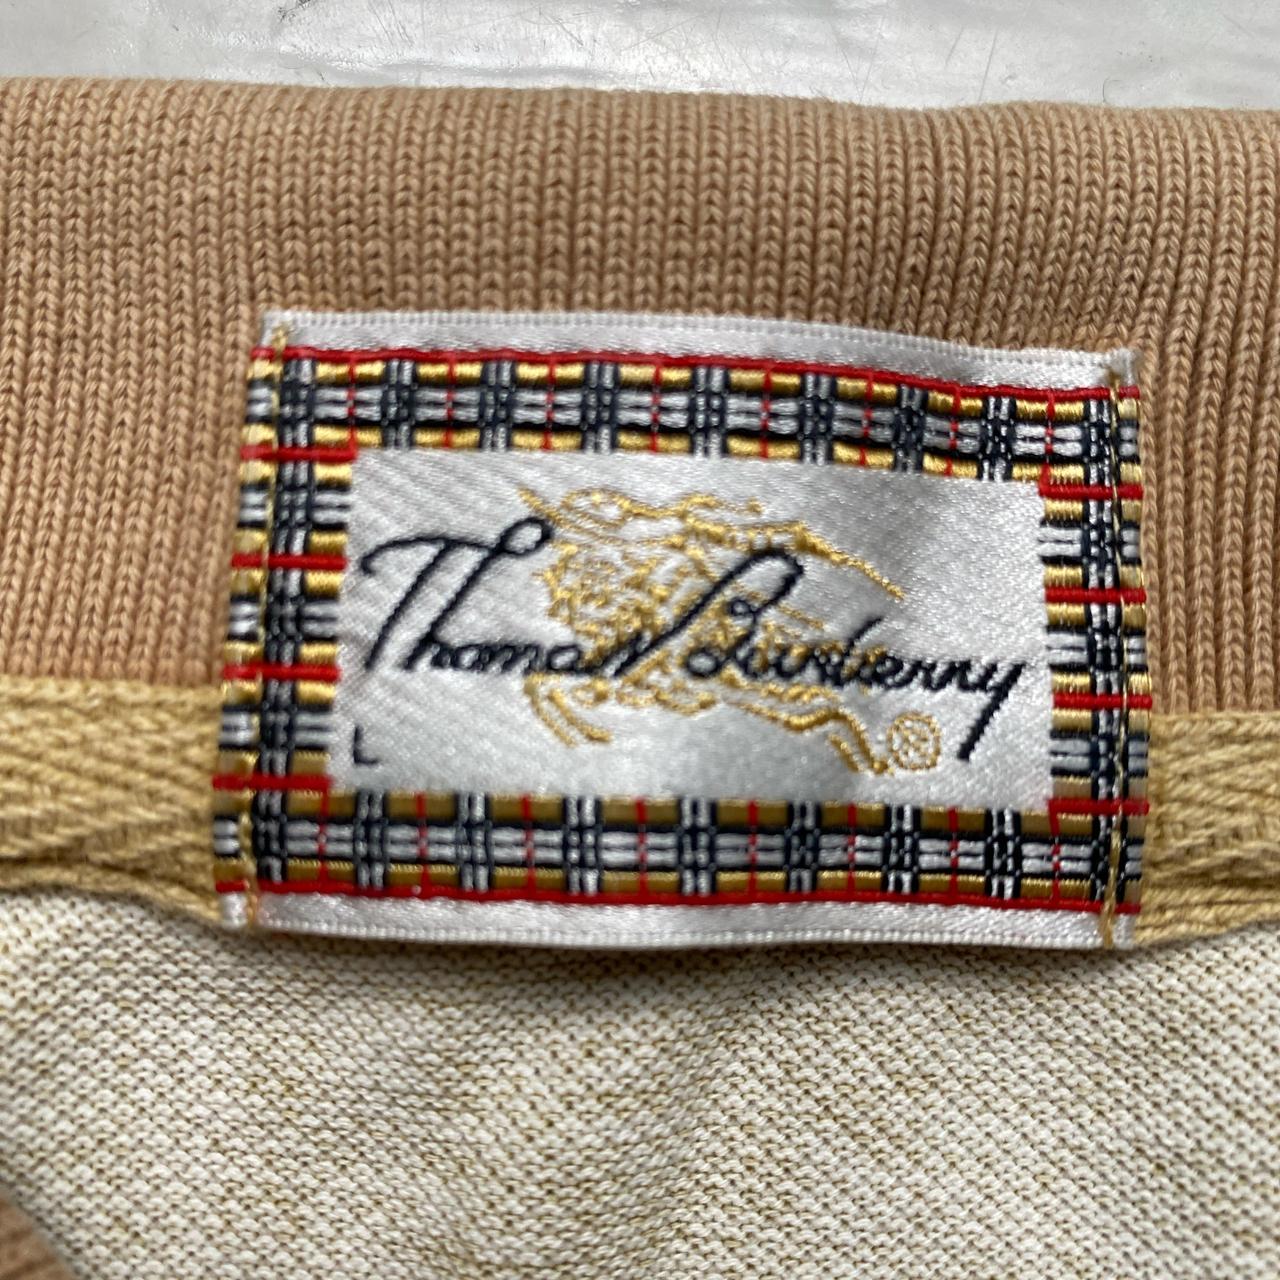 Thomas Burberry Vintage Cream and Grey Polo Shirt